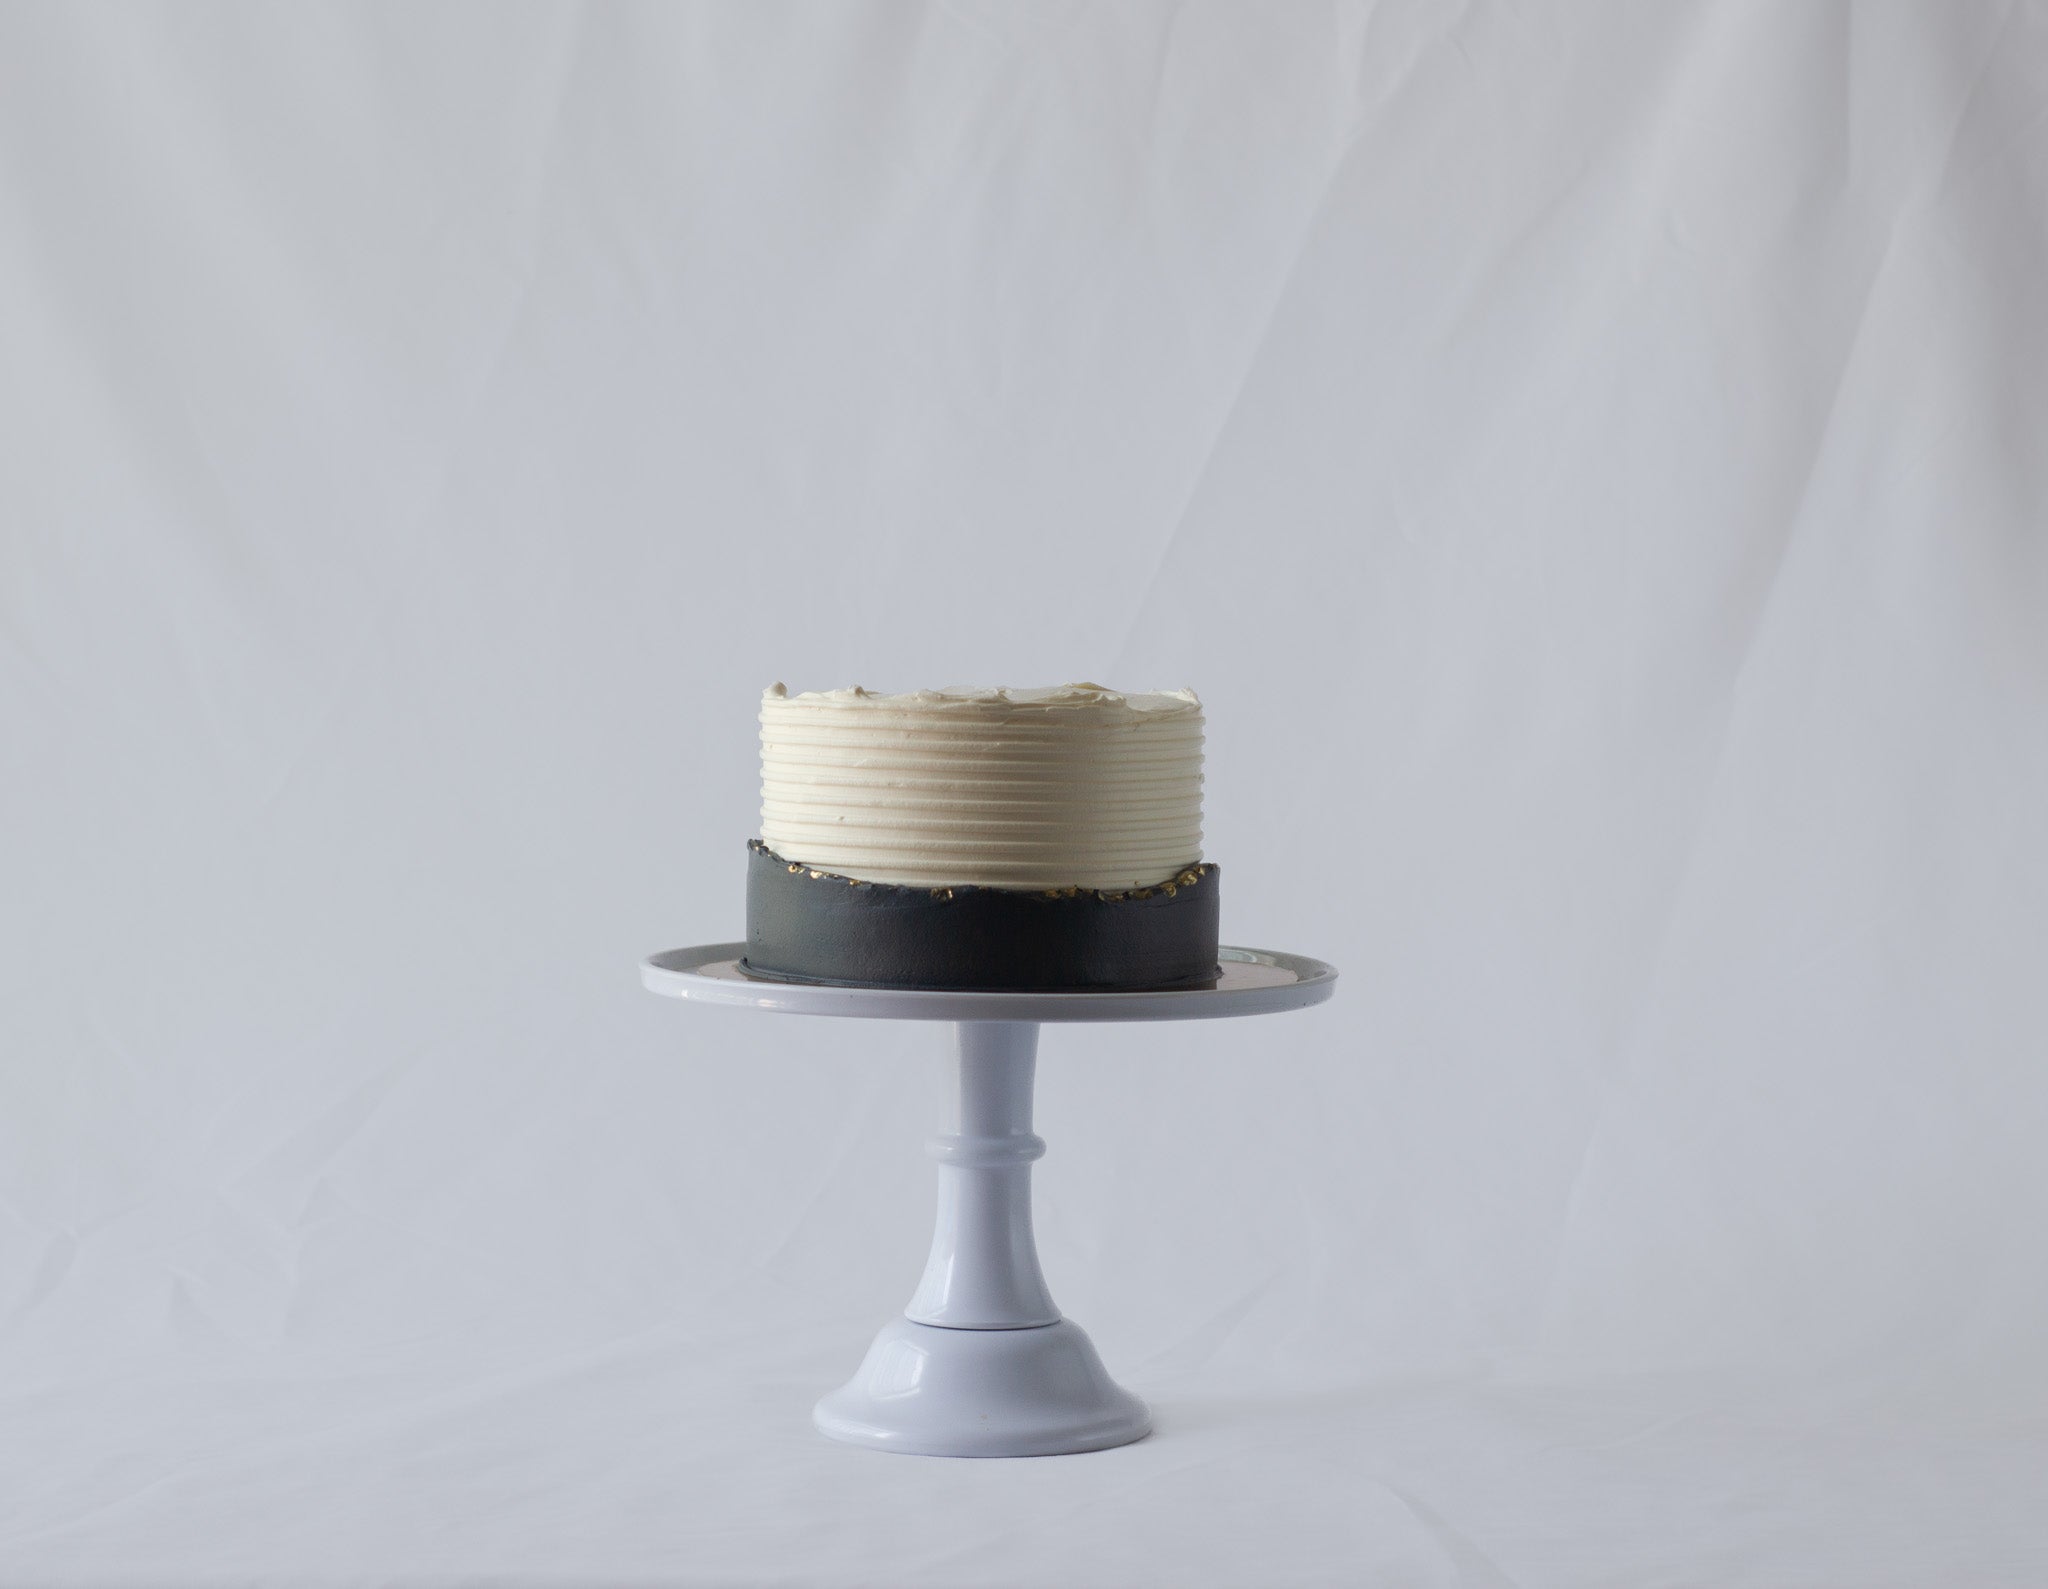 DIY - Decorate-IT-Yourself Cake